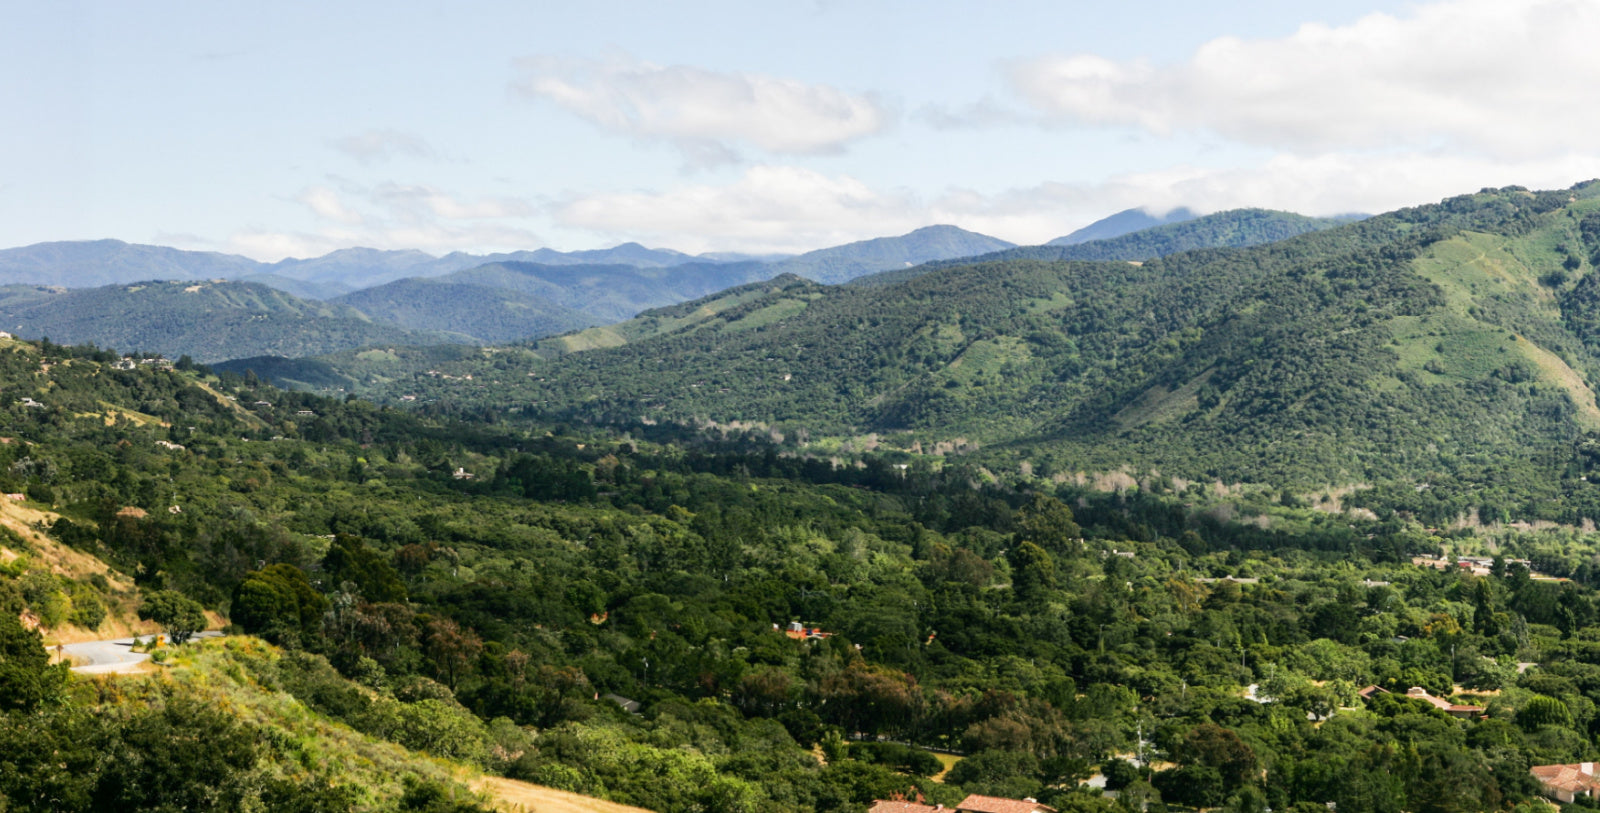 Sweeping panoramic views of green Santa Lucia mountain range and Carmel Valley